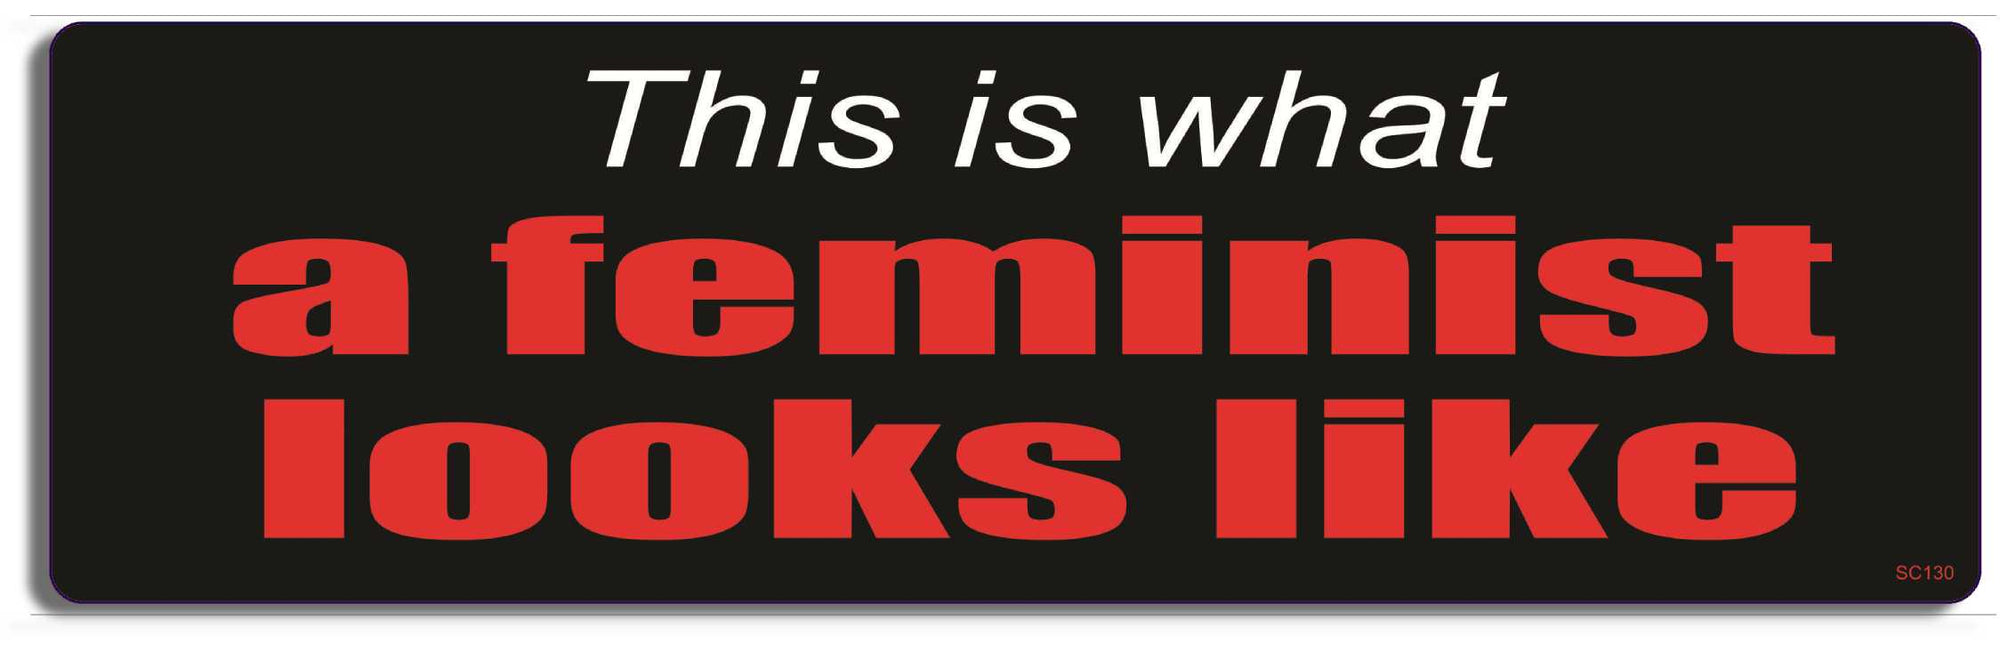 This is what a Feminist looks like - 3" x 10" Bumper Sticker--Car Magnet- -  Decal political Bumper Sticker Car Magnet This is what a Feminist looks like-  Decal for carsequality for women bumper sticker, feminist bumper sticker